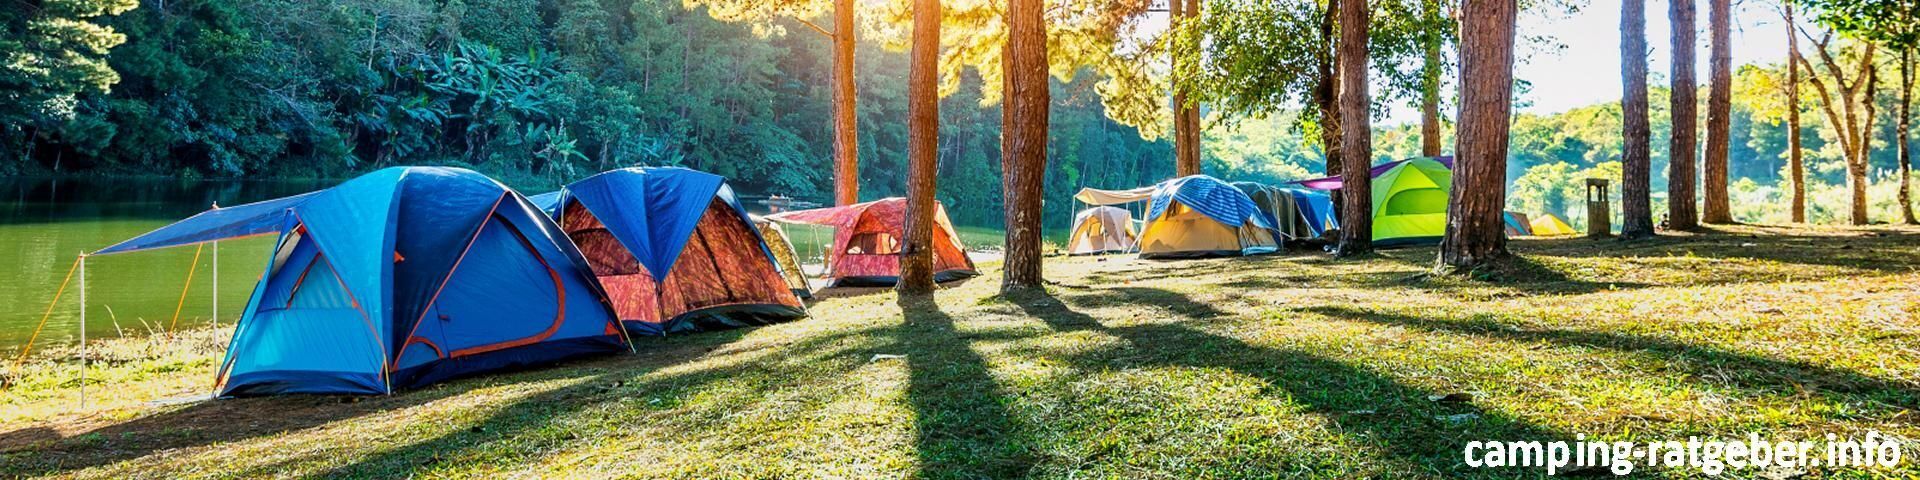 Camping – Natur hautnah erleben